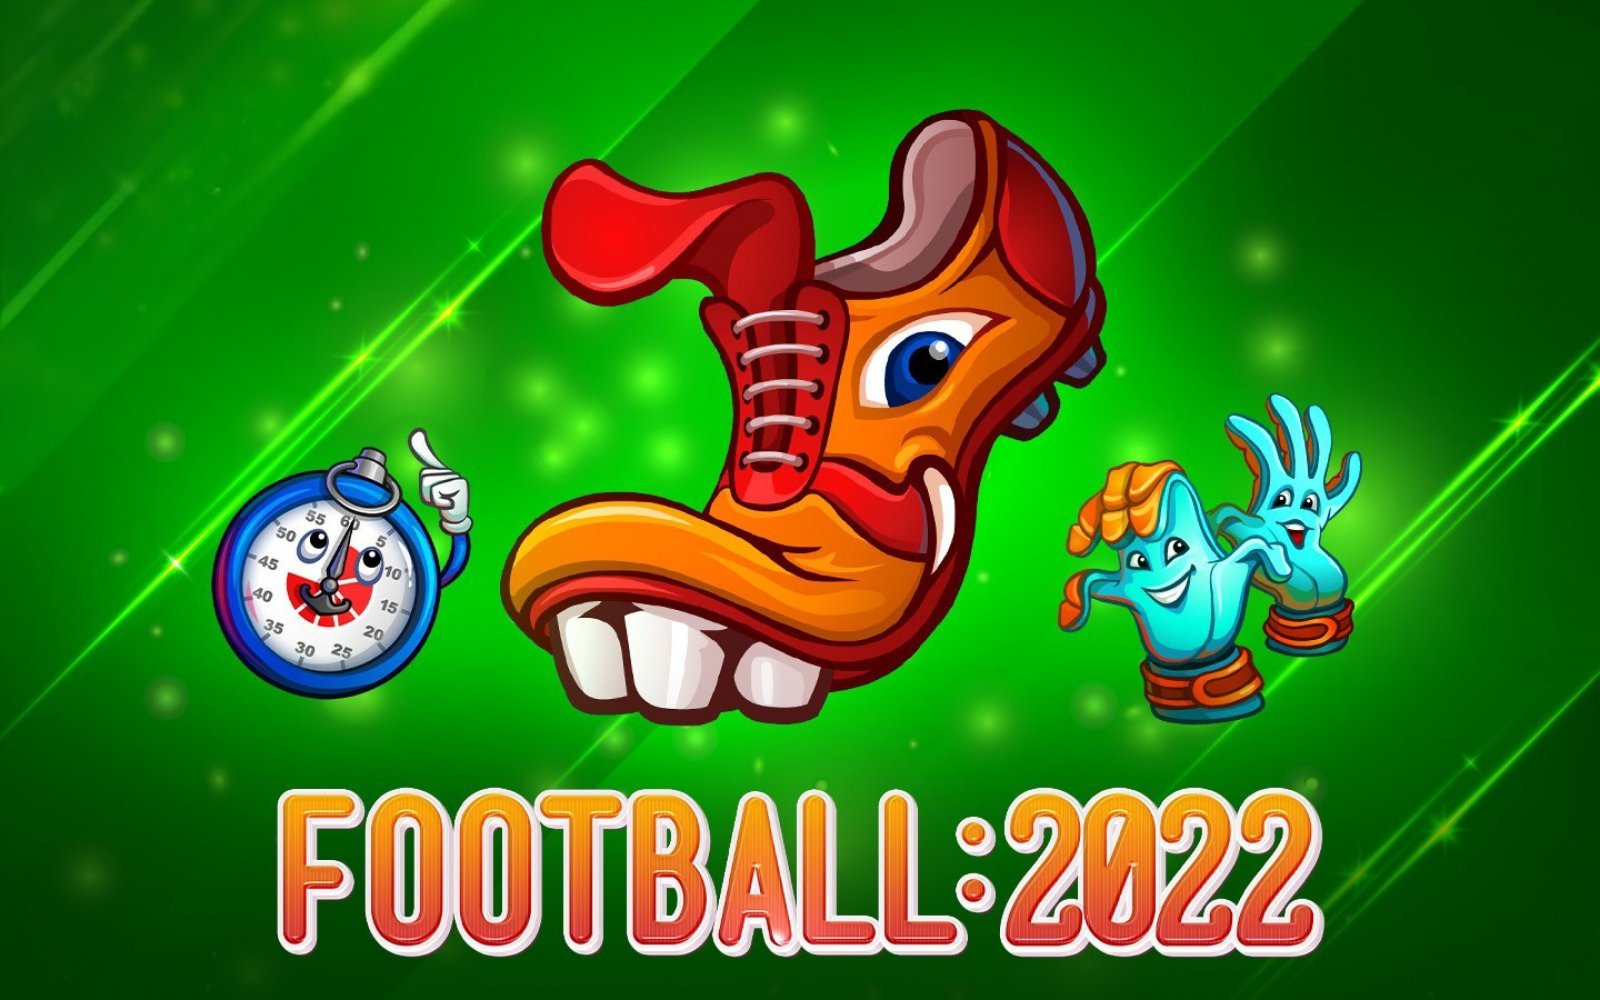 Play Football:2022 slot